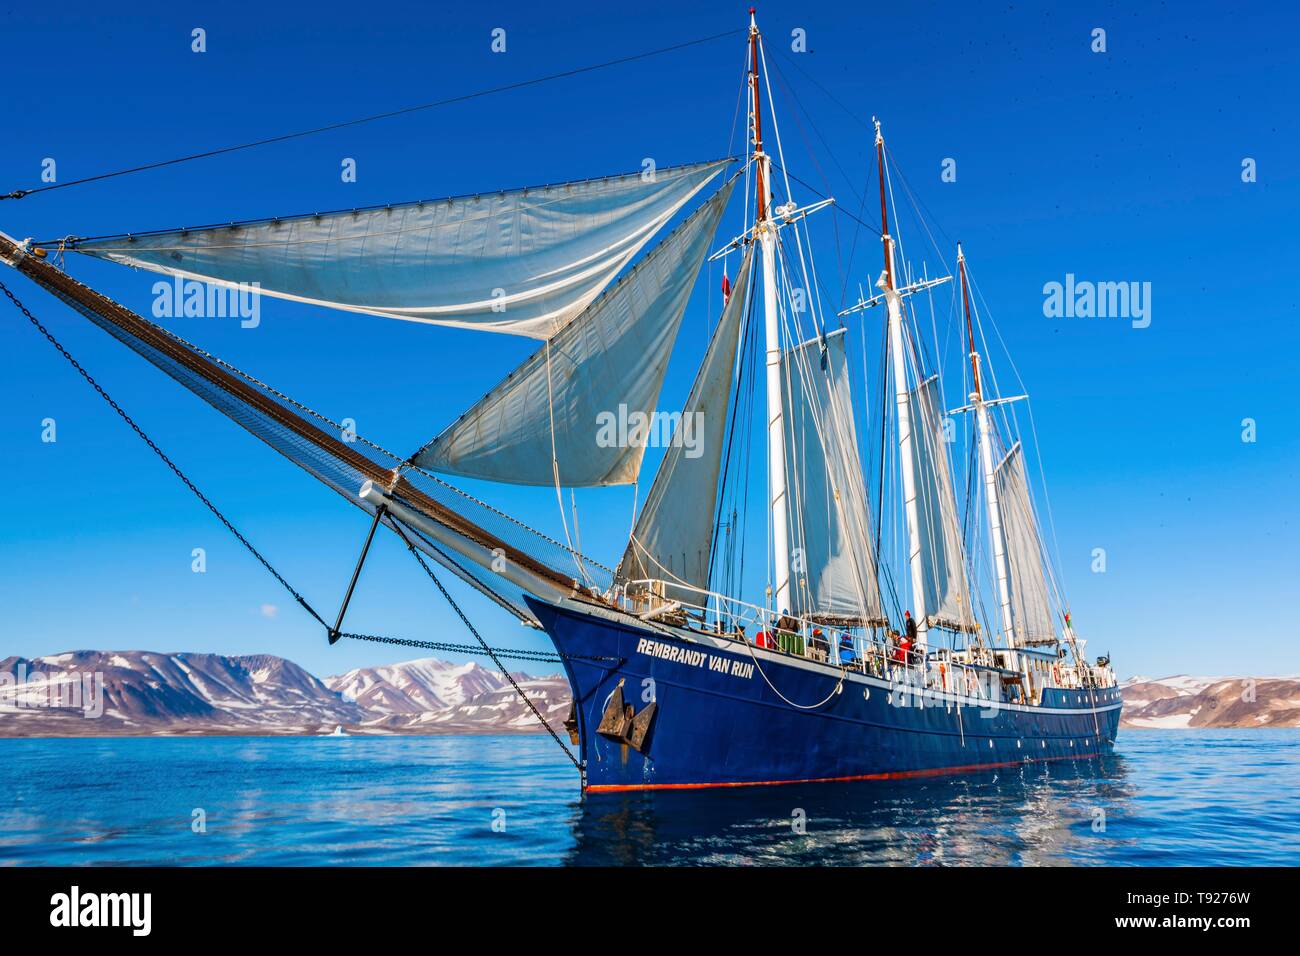 Sailing ship Rembrandt van Rijn in Scoresbysund, East Greenland, Greenland  Stock Photo - Alamy